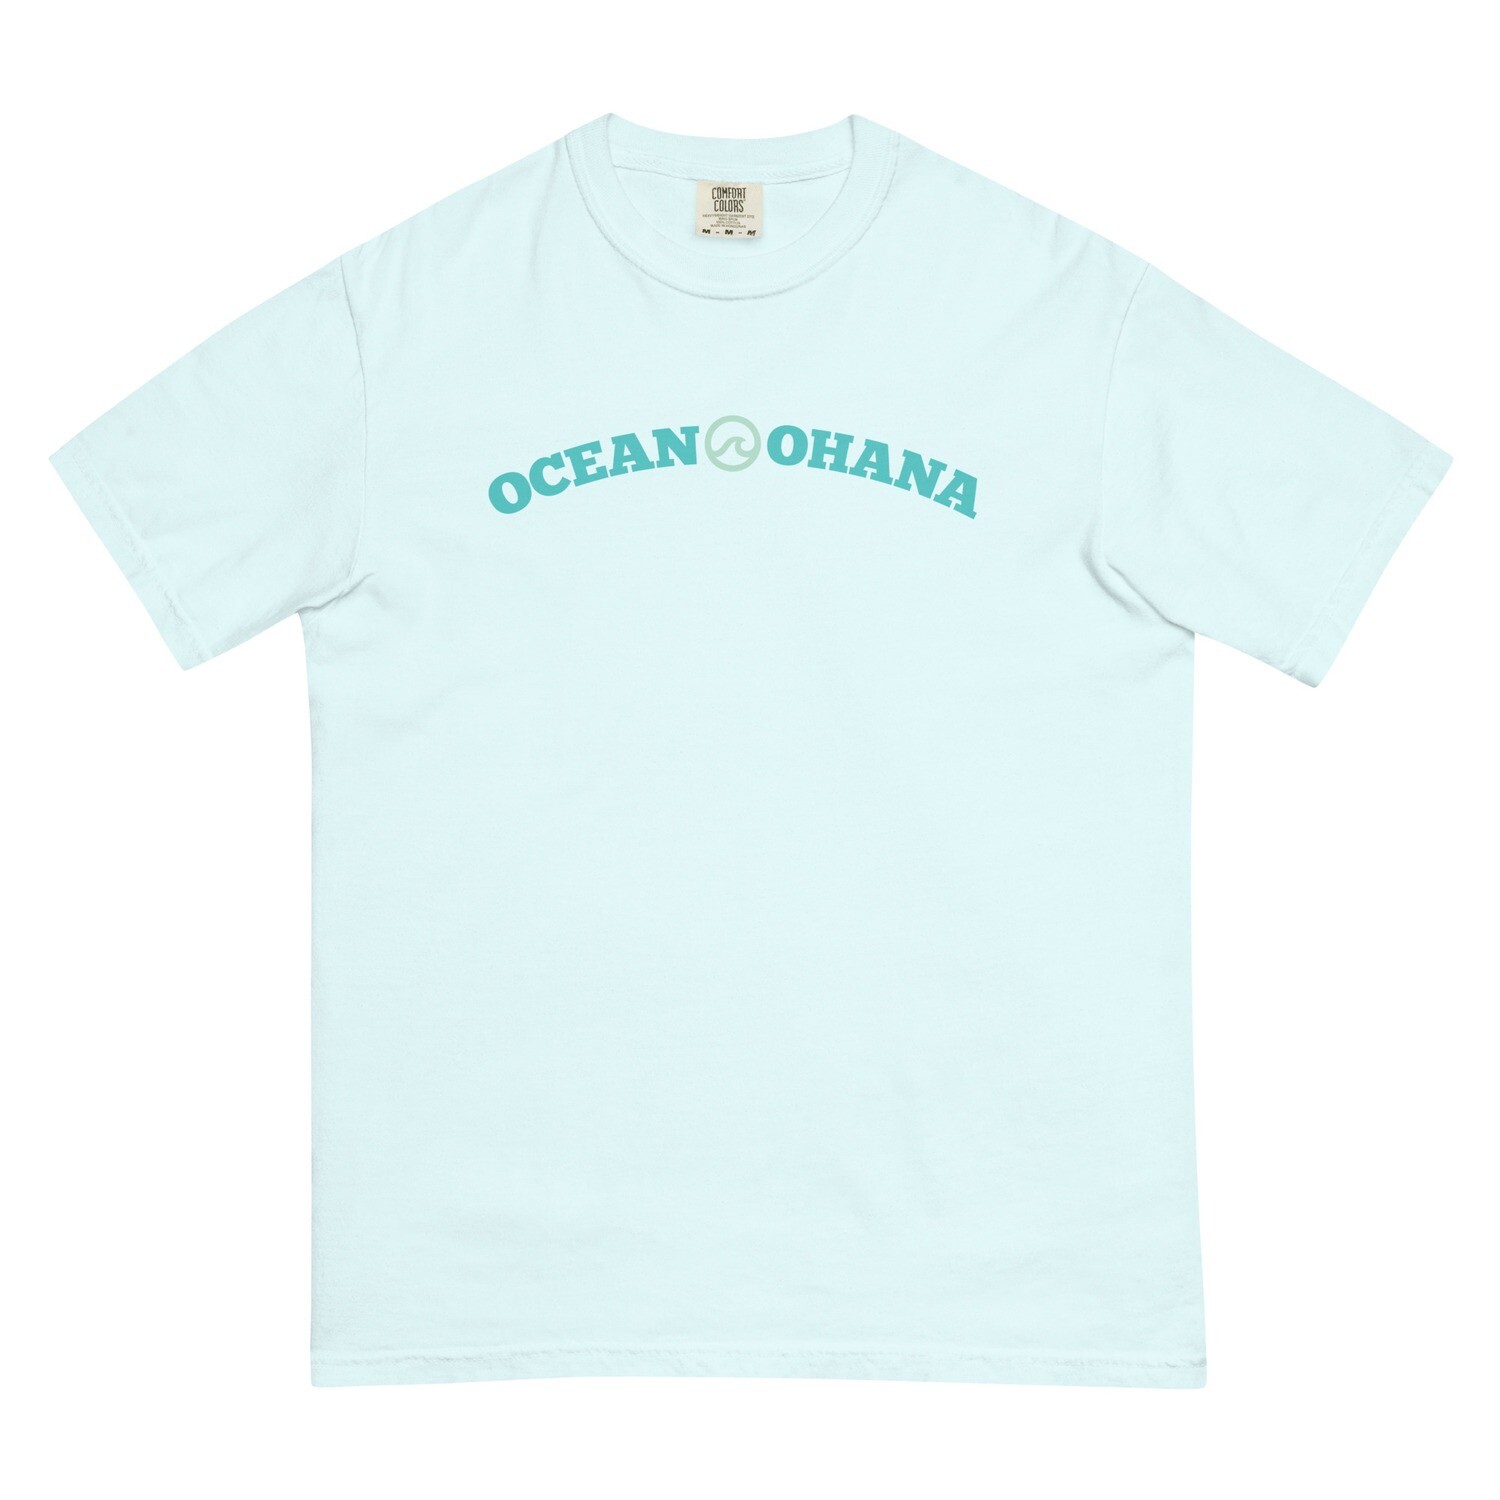 Ocean Ohana heavyweight garment-dyed tee (ships separately)